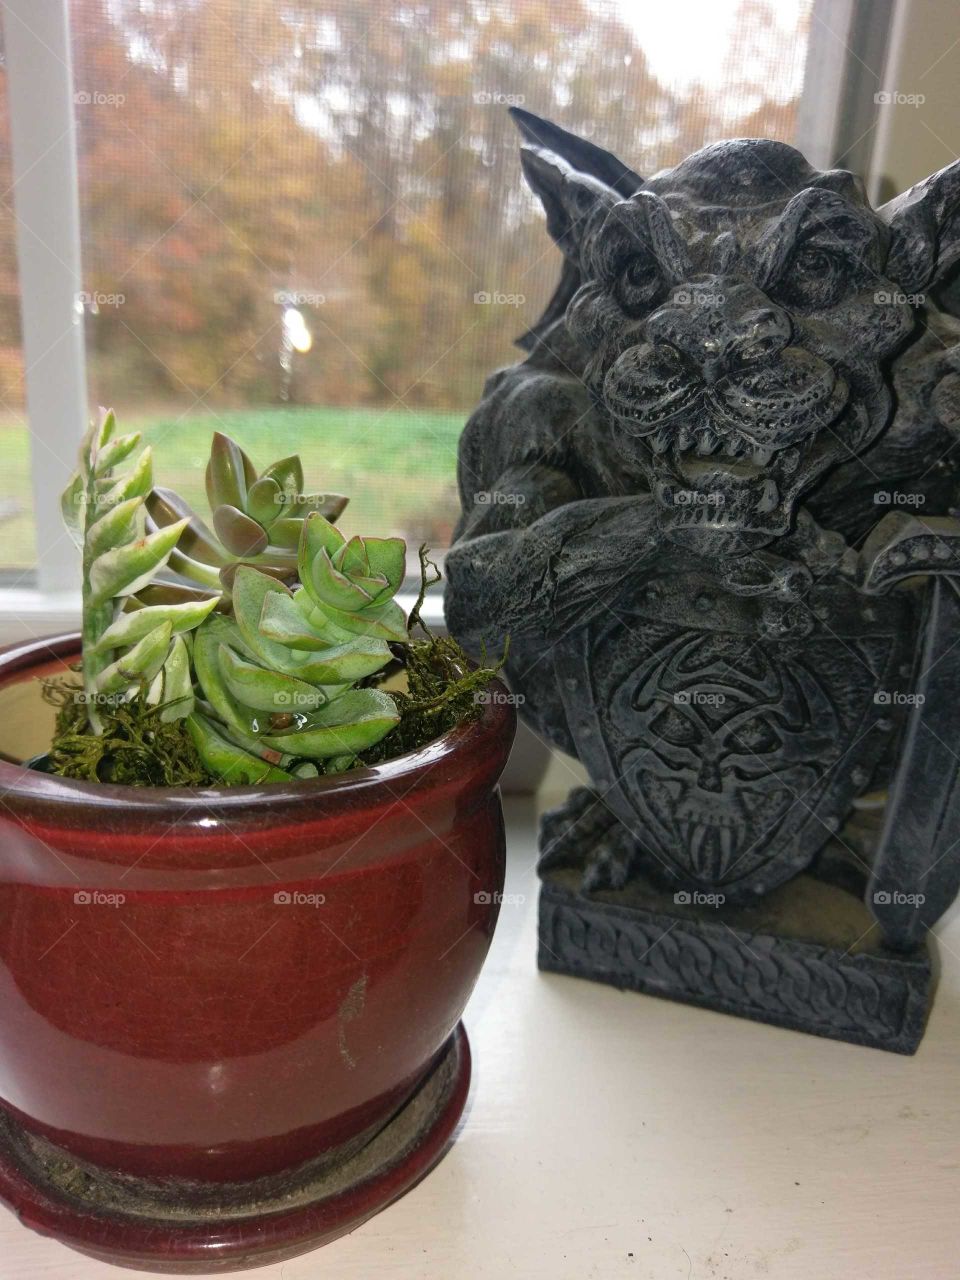 Gargoyle and succulent